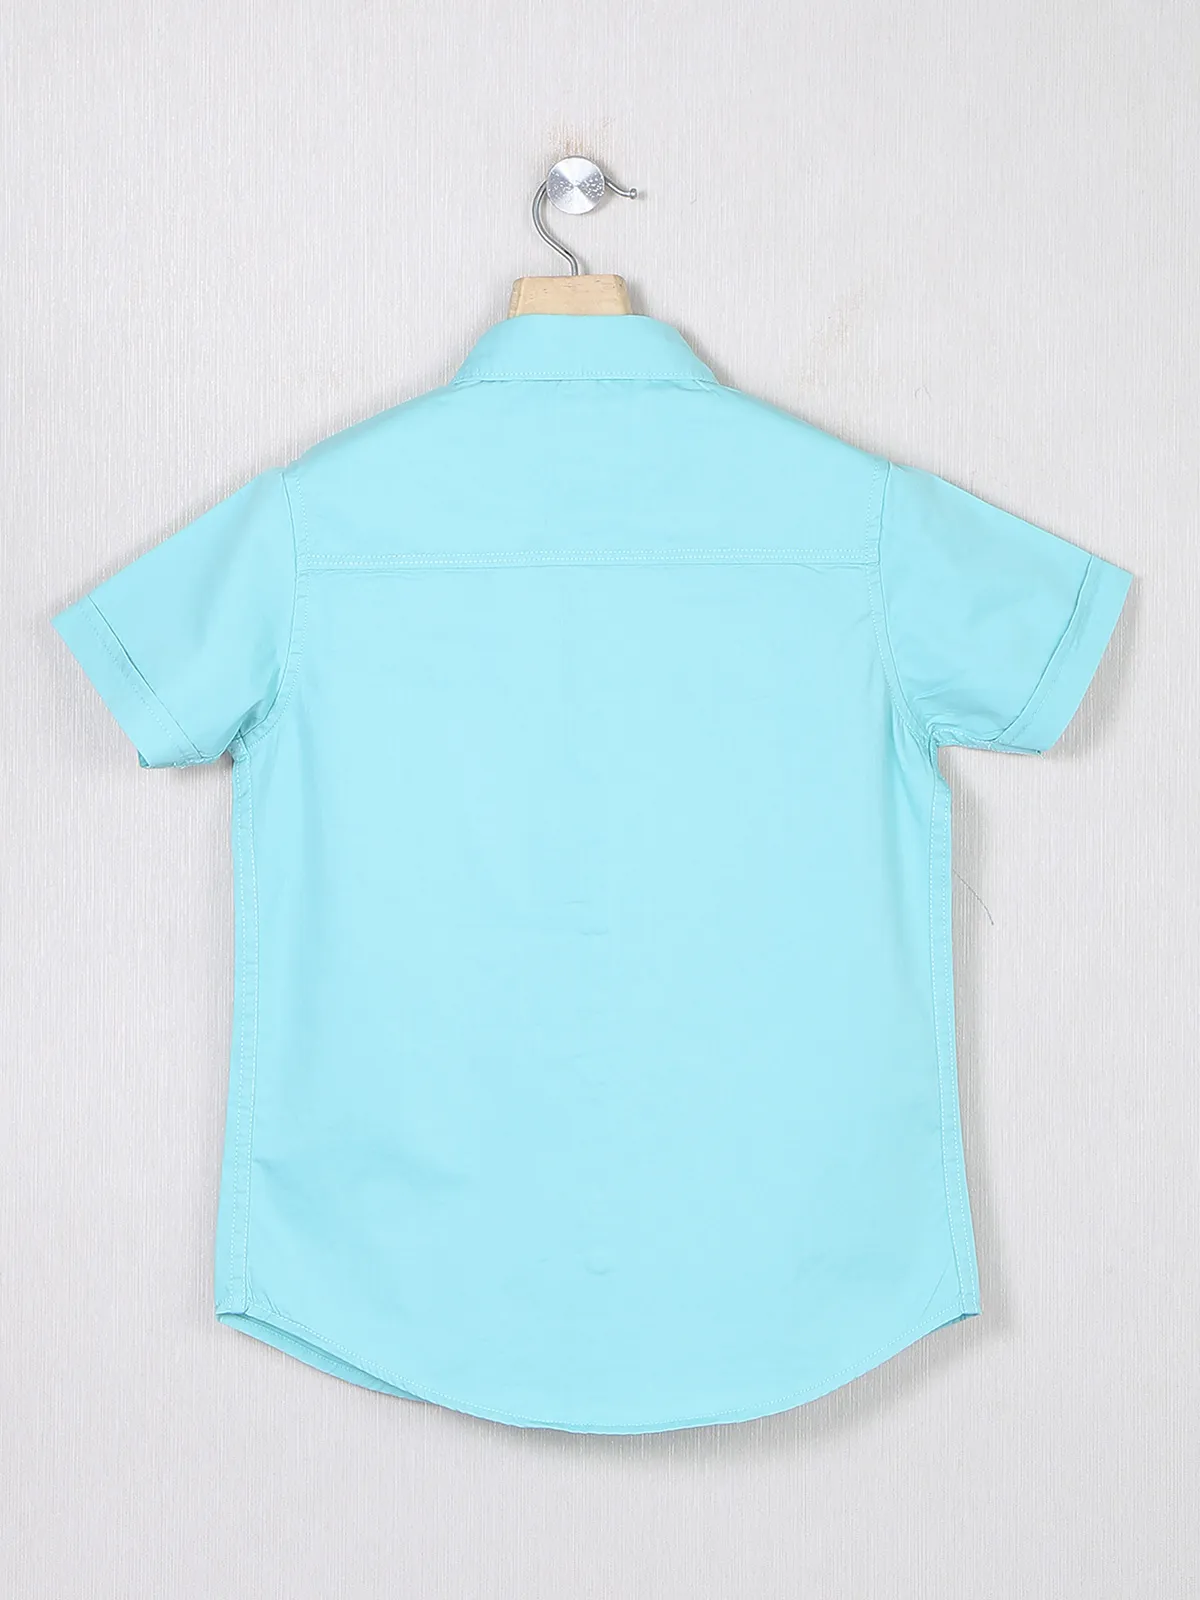 Ruff printed cotton fabric aqua shirt